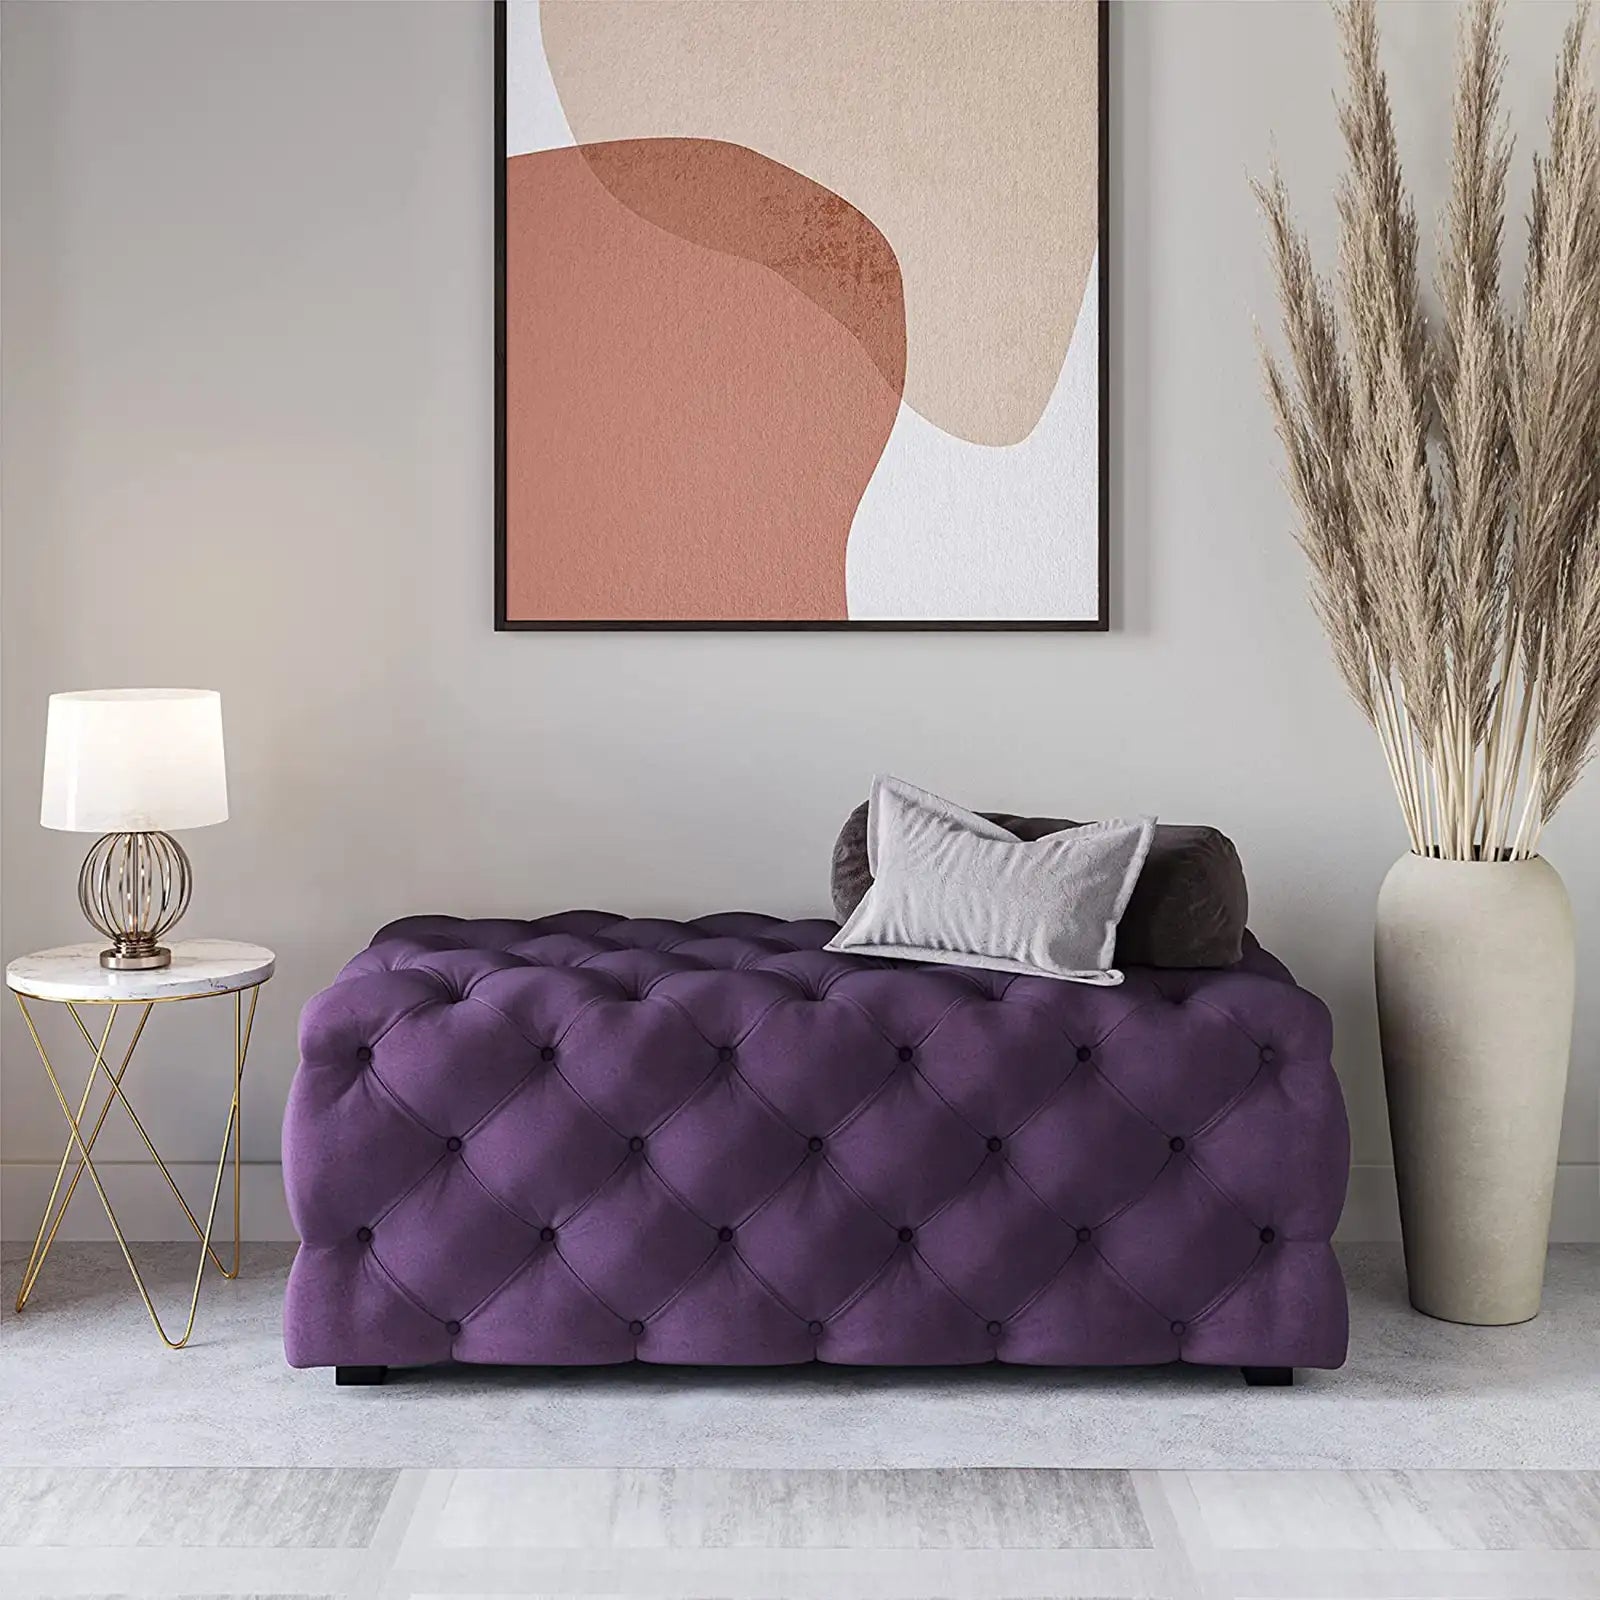 Rectangular Velvet Ottoman, Tufted Bench for Living Room, Bedroom or Entryway Seating